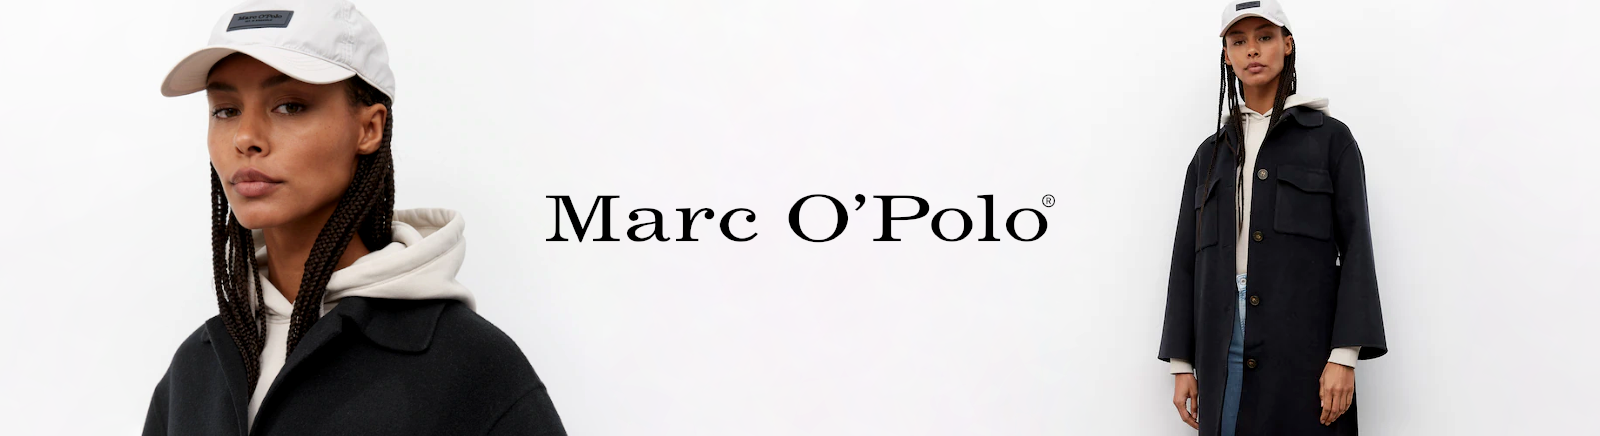 Juppen: Marc O'Polo Boots für Damen kaufen online shoppen